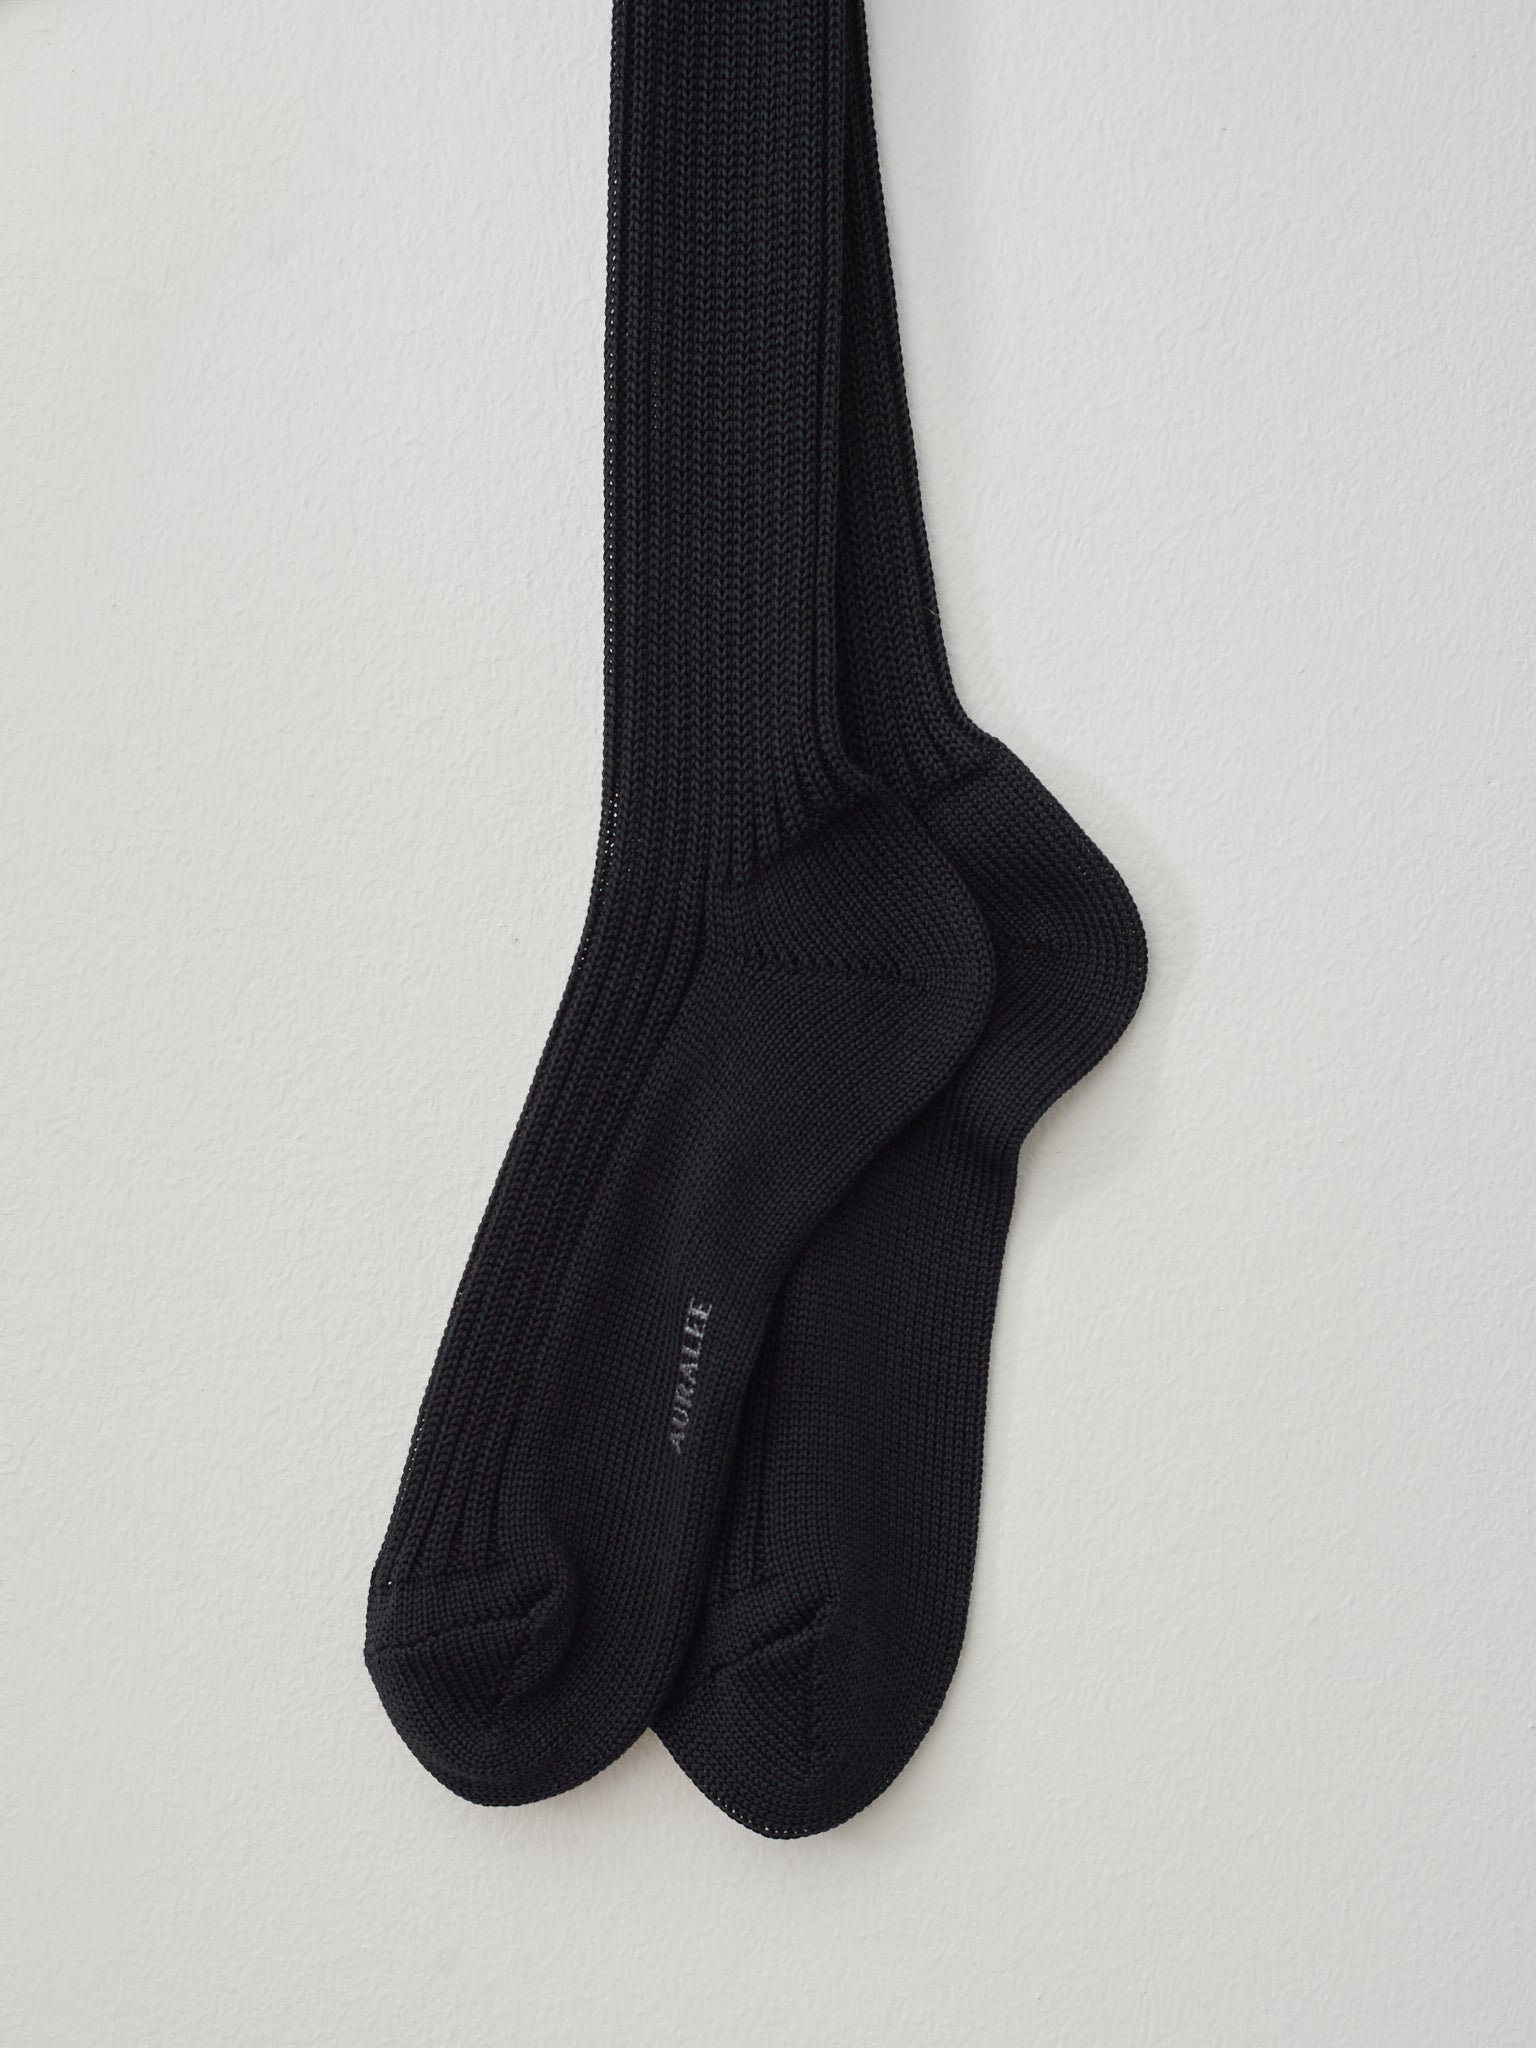 Namu Shop - Auralee Women's Cotton Rib Low Gauge Socks - Beige, Black